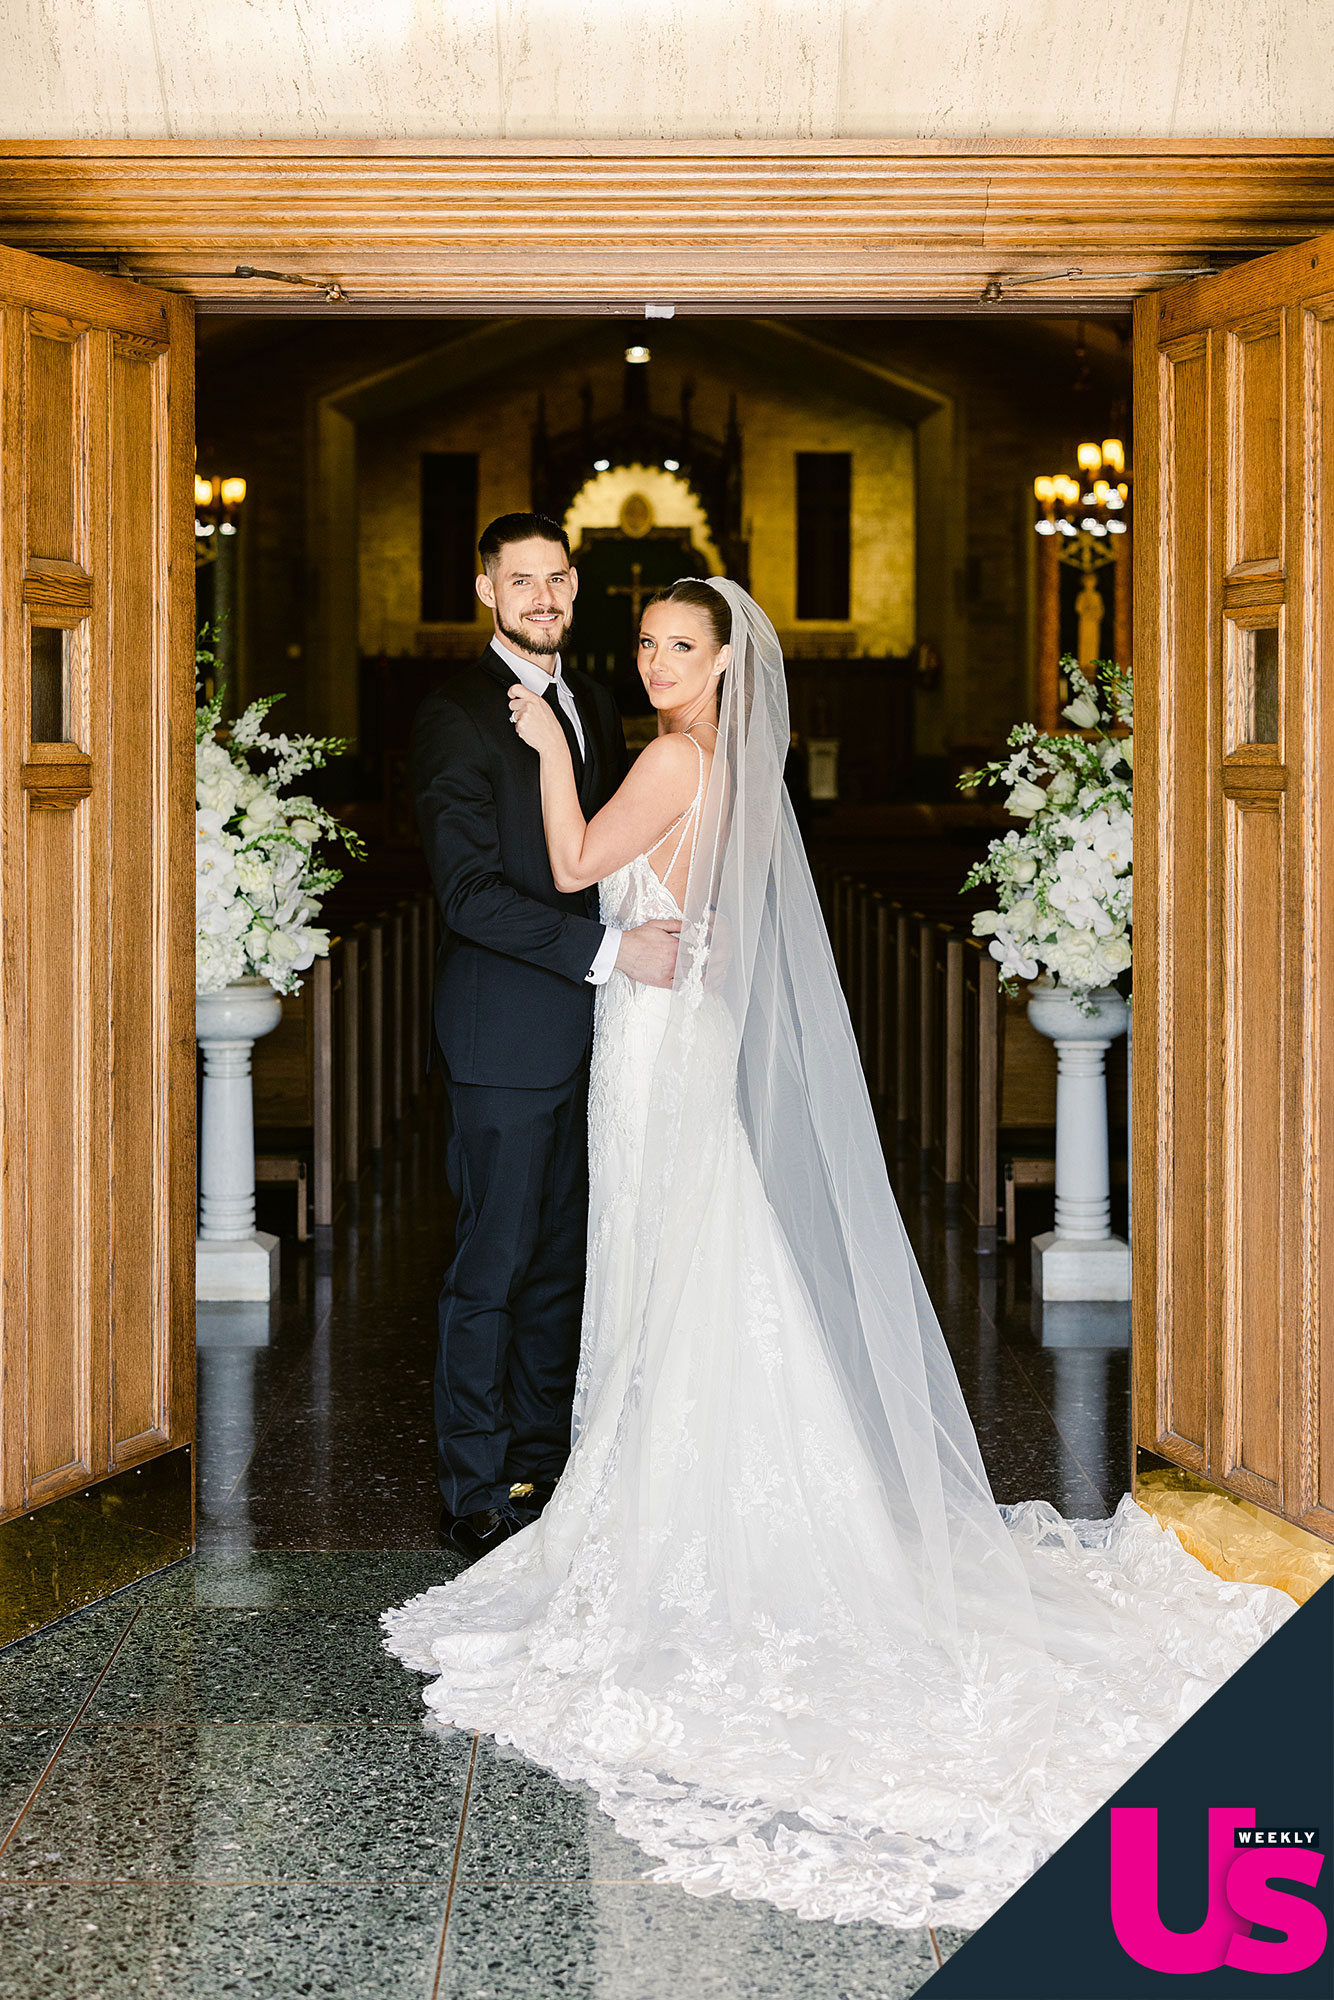 Feature The Challenge Zach Nichols and Jenna Compono Say Dream Wedding Was Worth the Wait